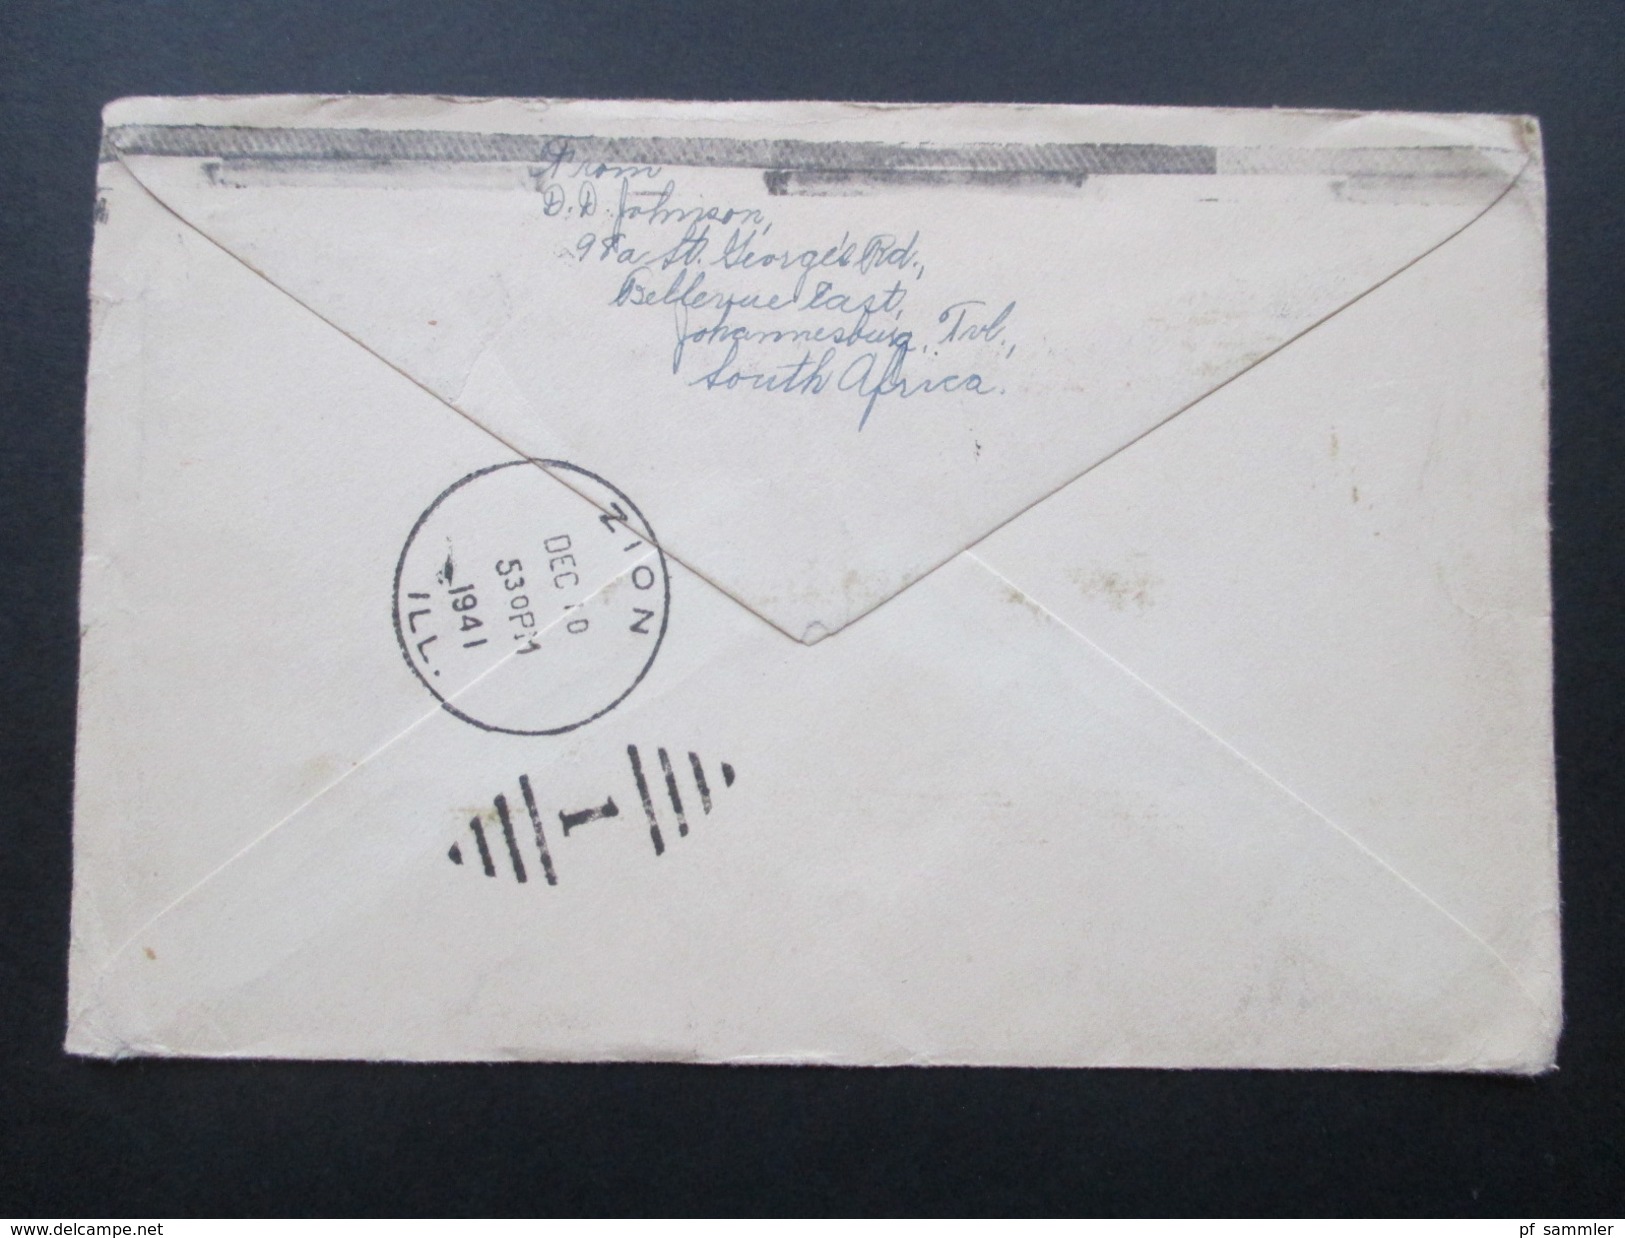 Suid-Afrika 1941 Brief Von Johannesburg - Zion Ill. USA Forwarded To 1004 Nevada - Lettres & Documents